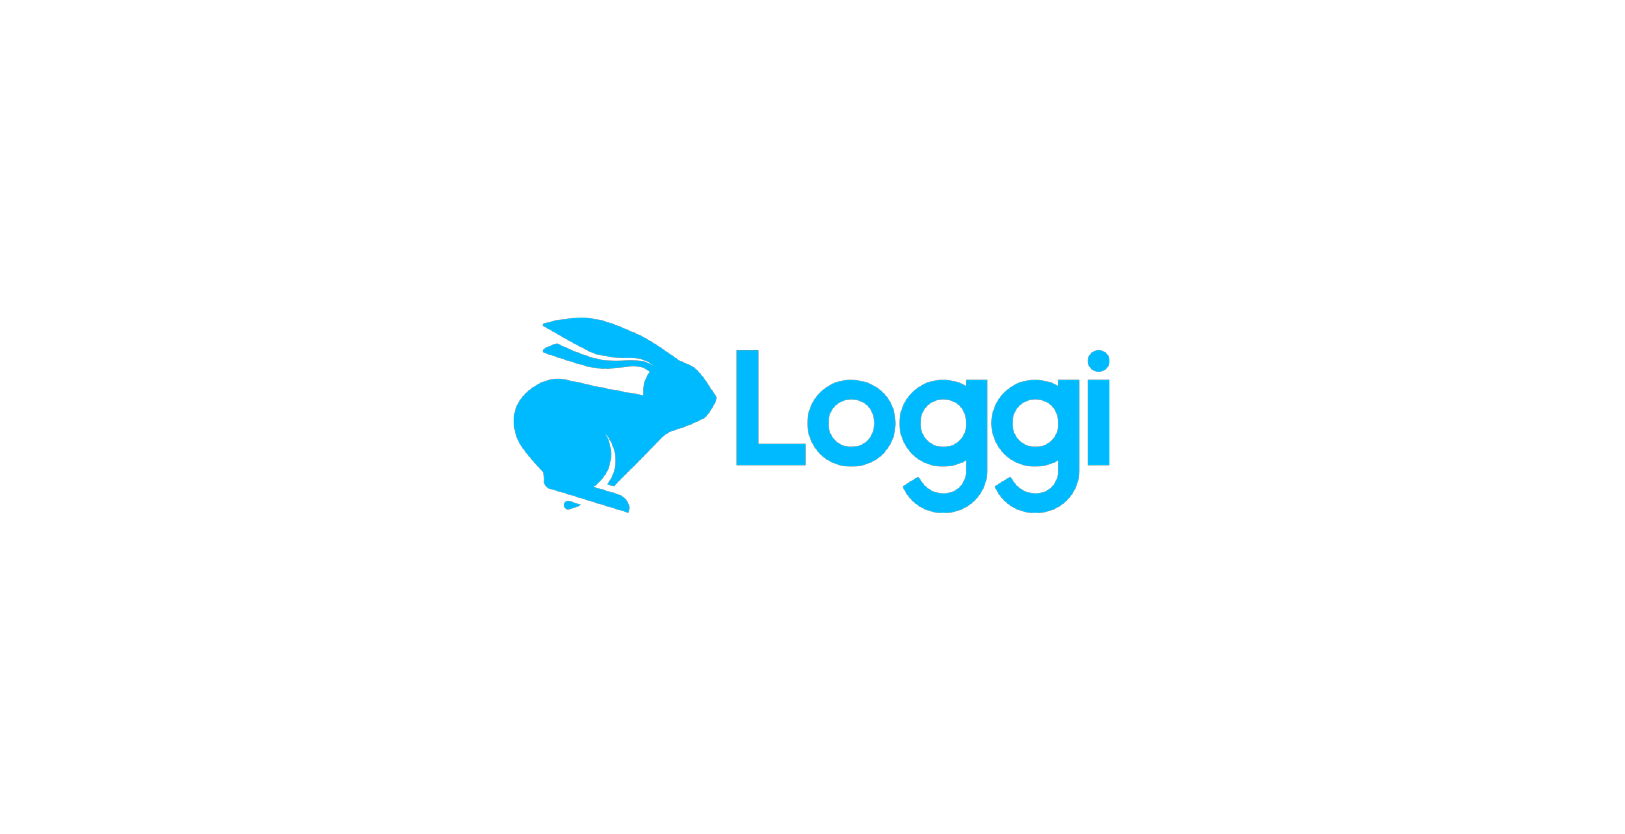 Vision Fund investment portfolio company Loggi's logo